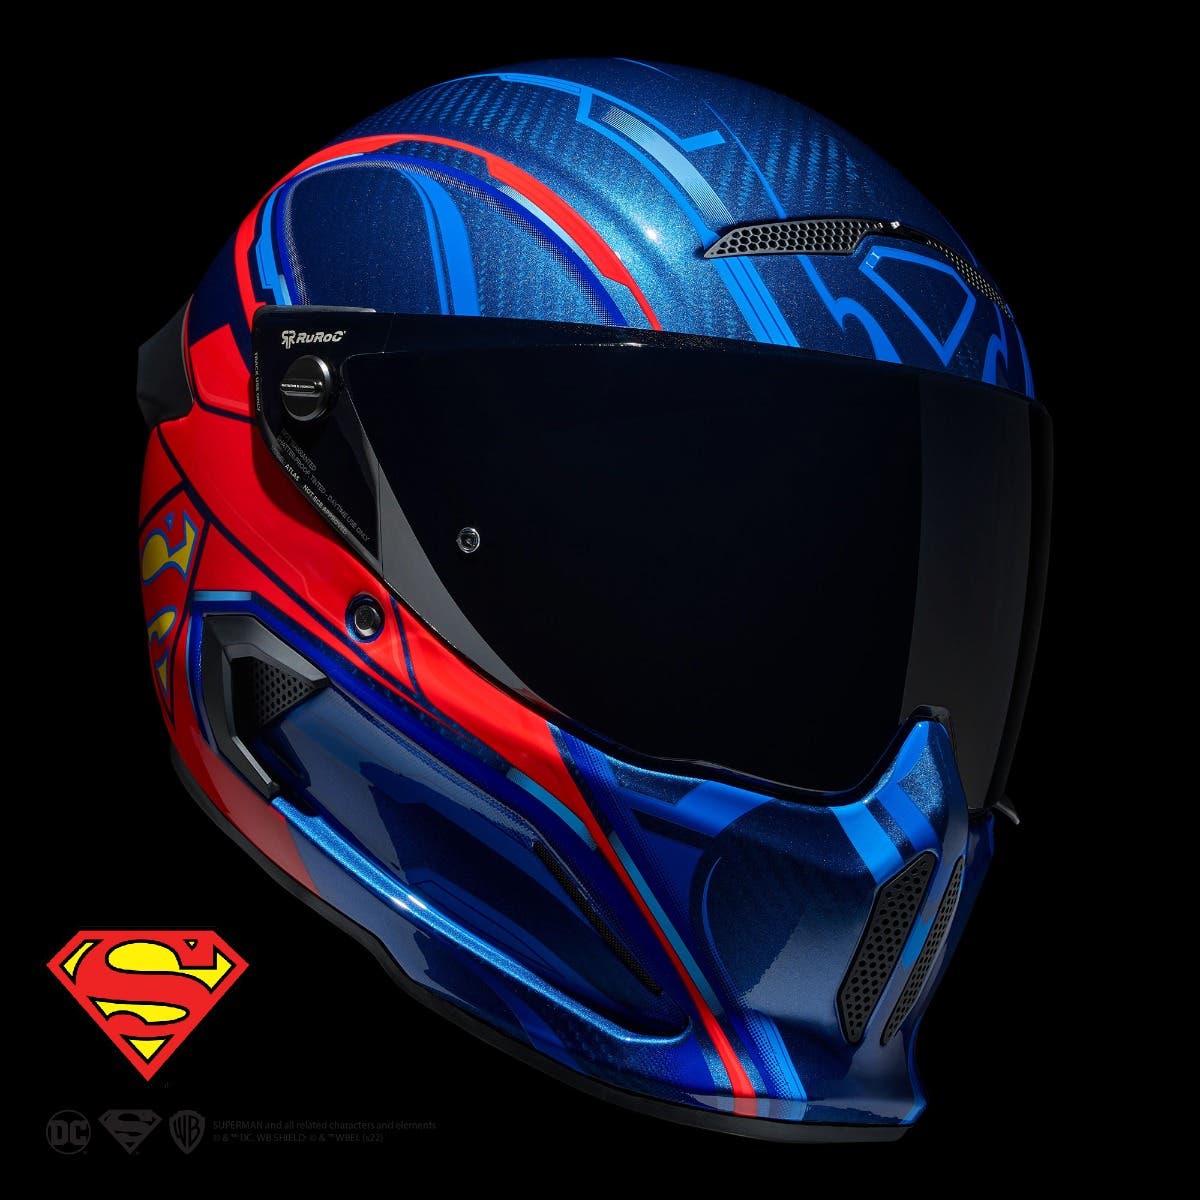 Bring On The Custom Helmet Paint, Part 2 - Motocross Feature